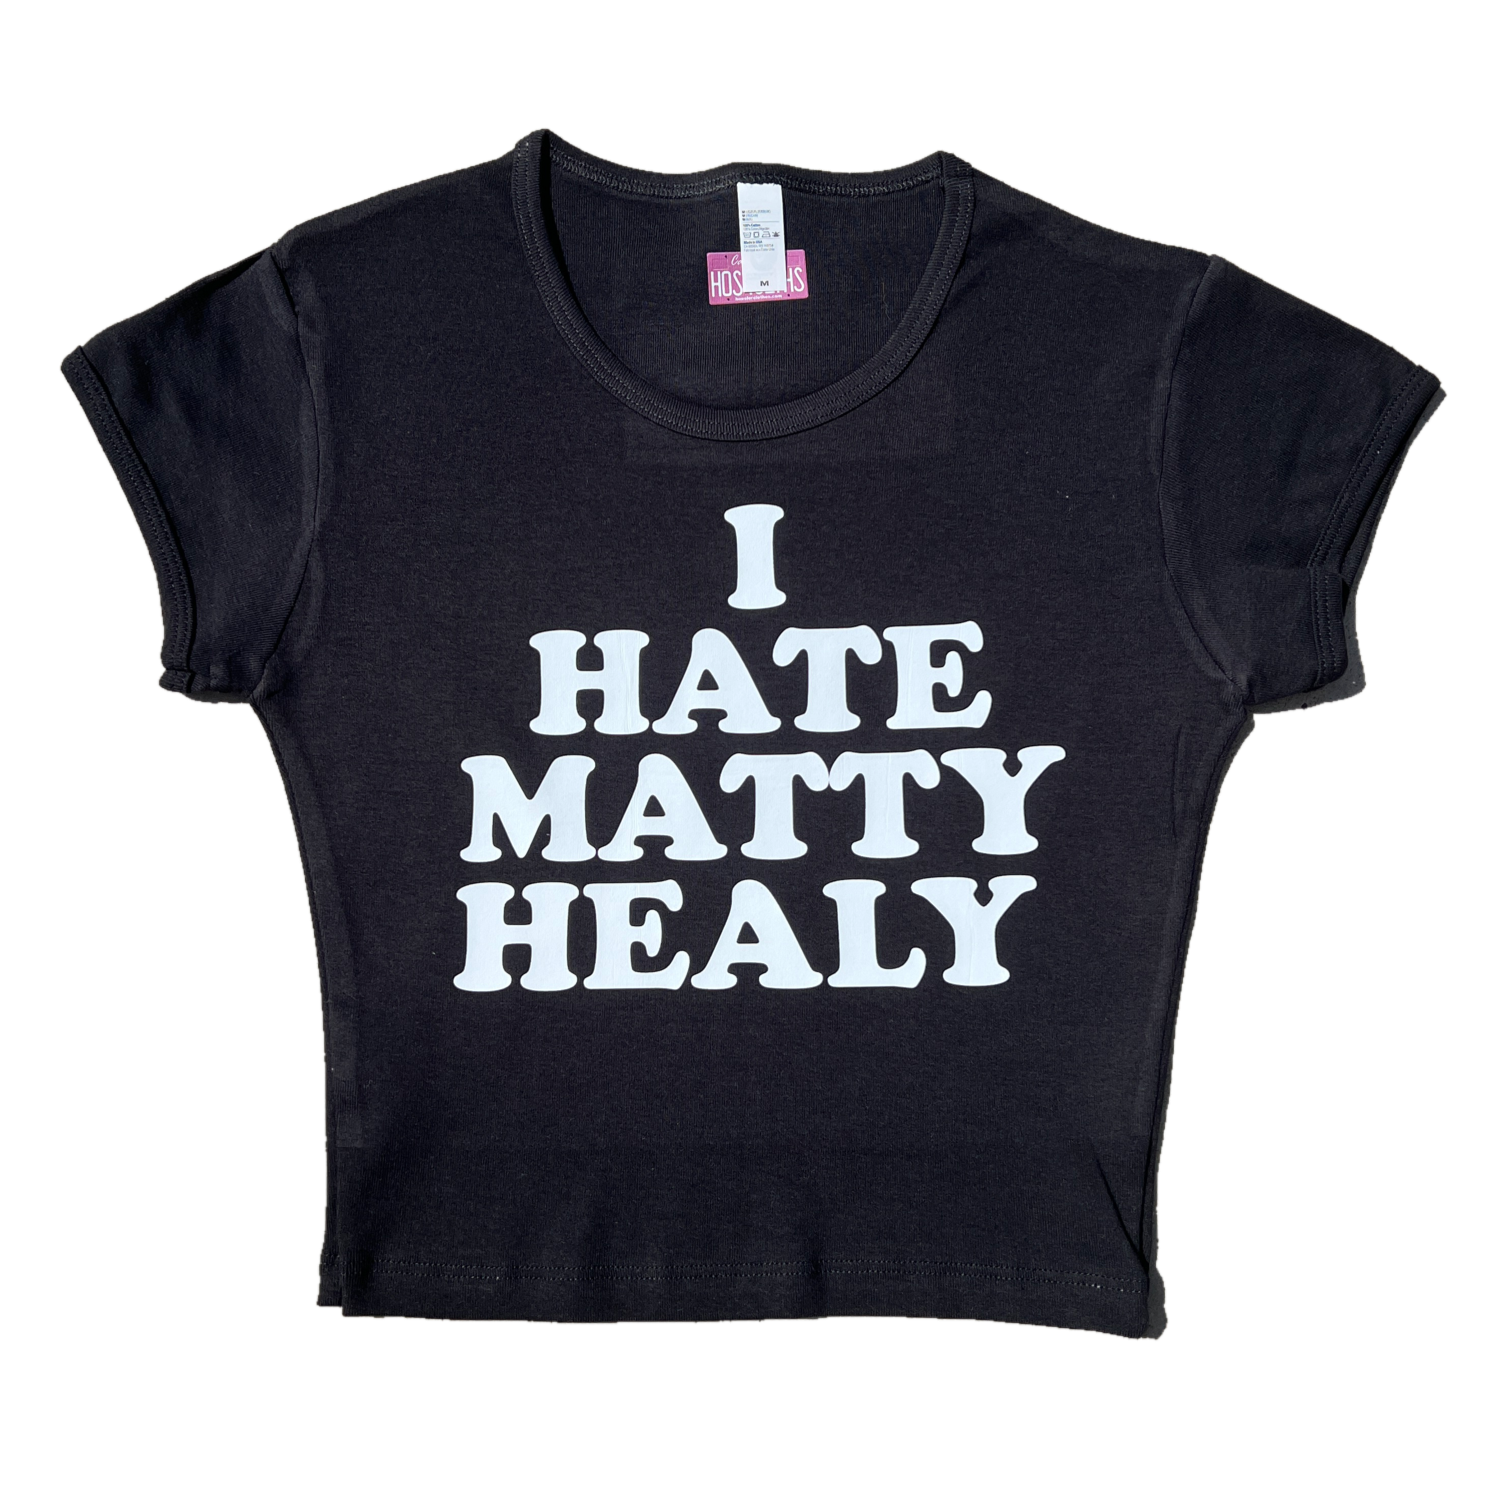 i hate matty healy baby tee